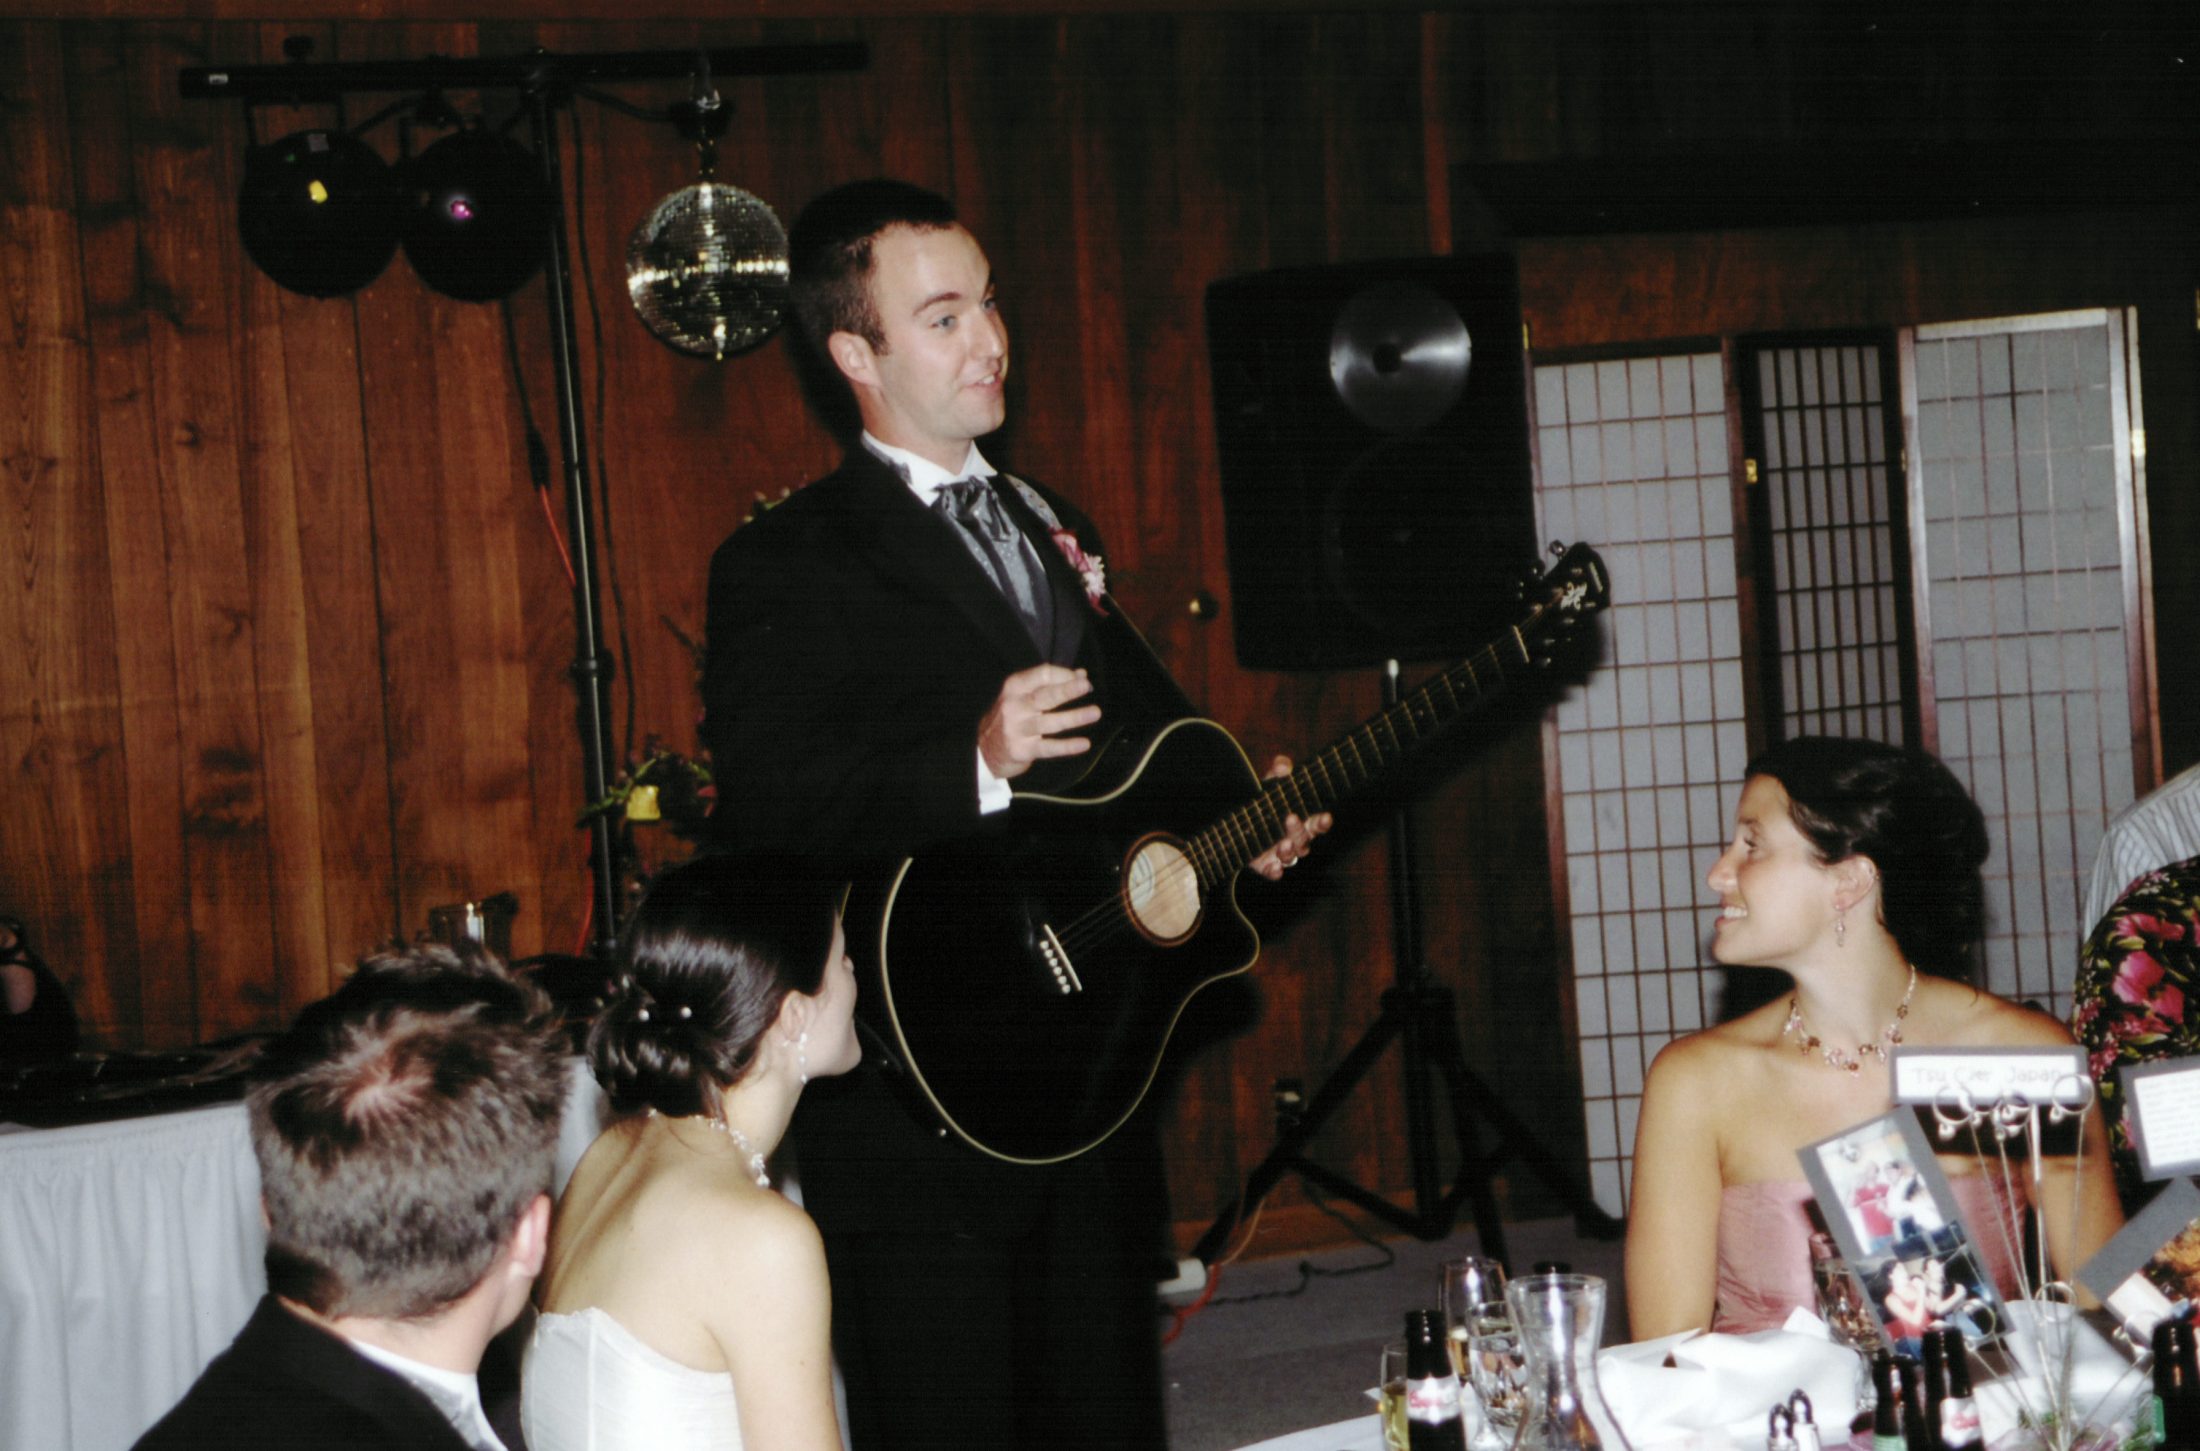 DC widow blog writer Marjorie Brimley's husband plays guitar at their wedding